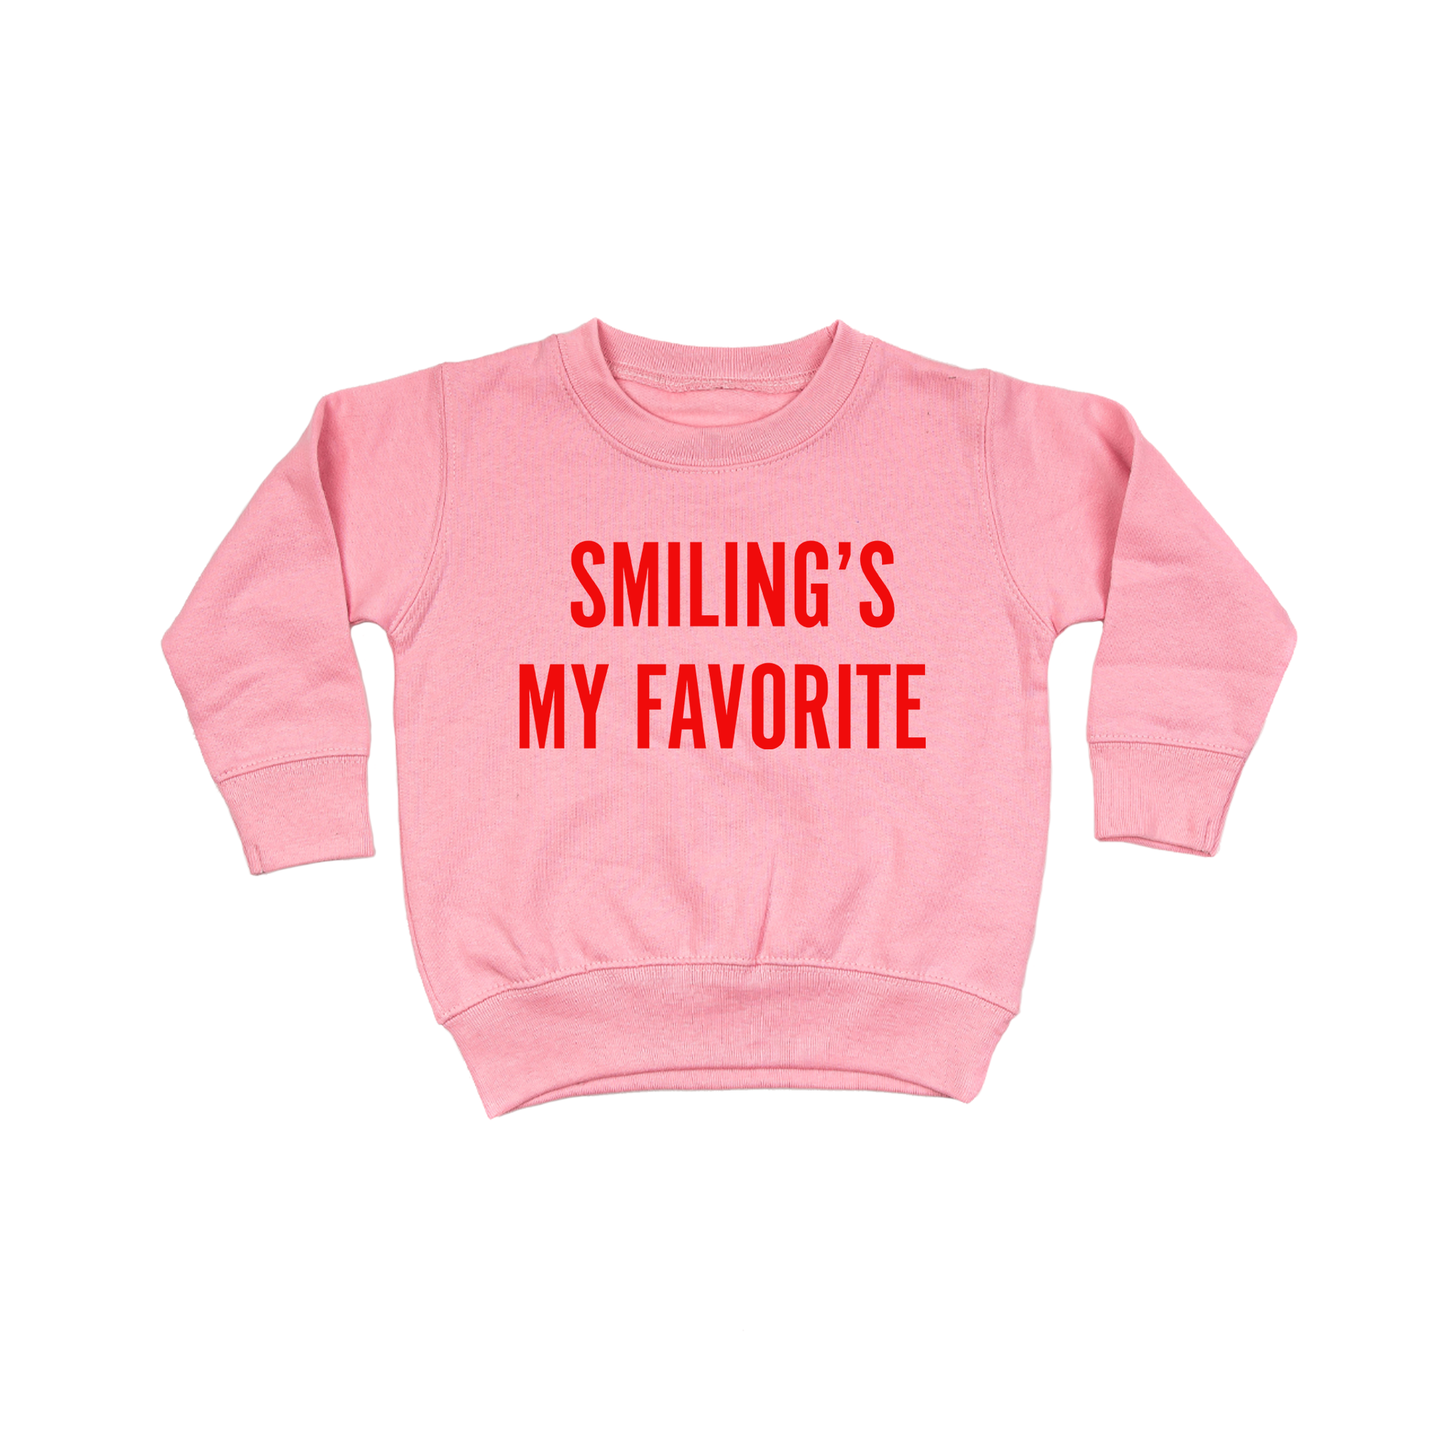 Smiling's My Favorite (Red) - Kids Sweatshirt (Pink)